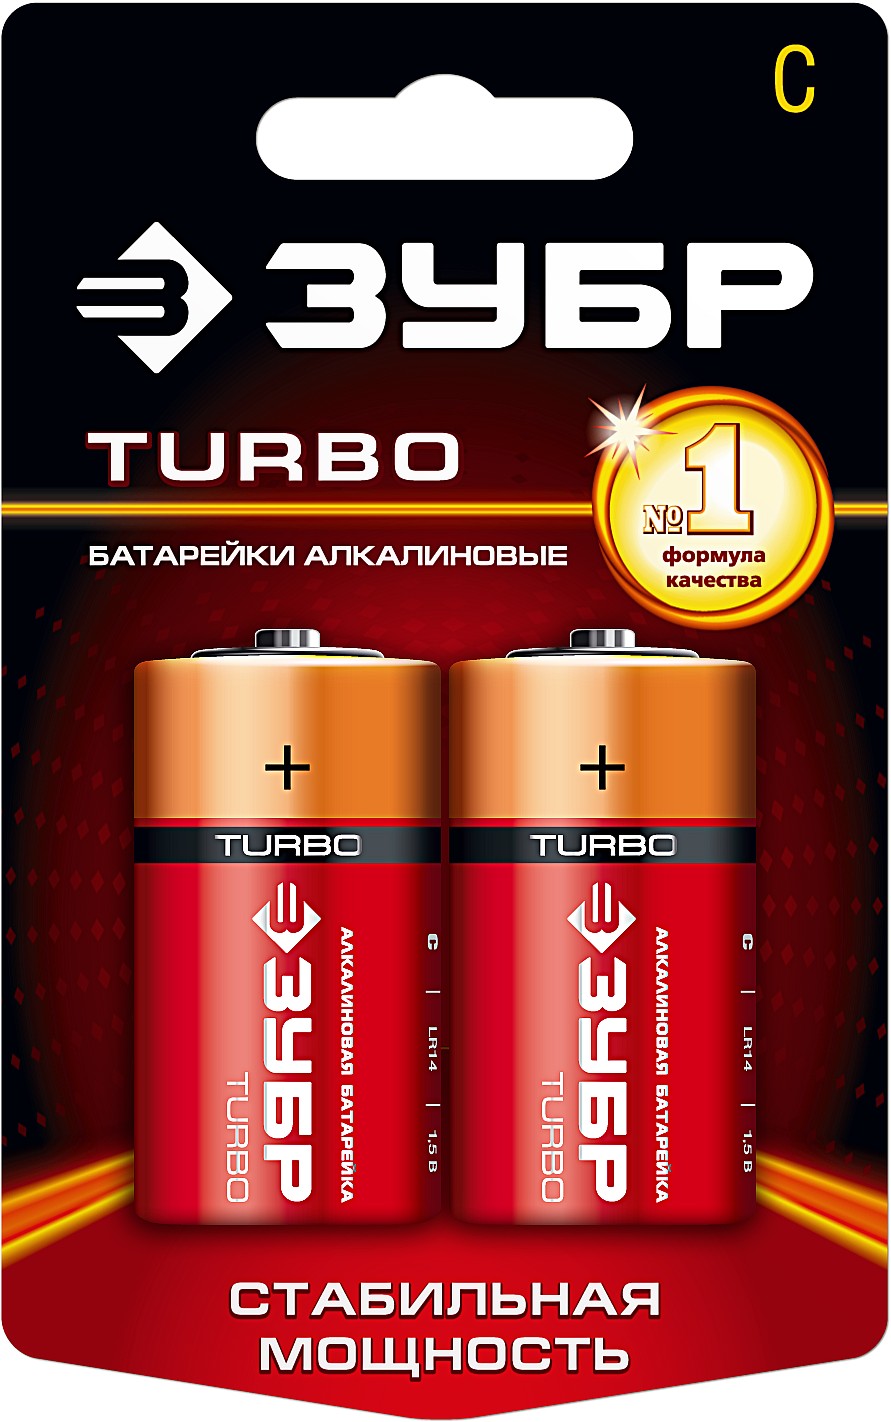 ЗУБР TURBO, С х 2, 1.5 В,, алкалиновая батарейка (59215-2C)